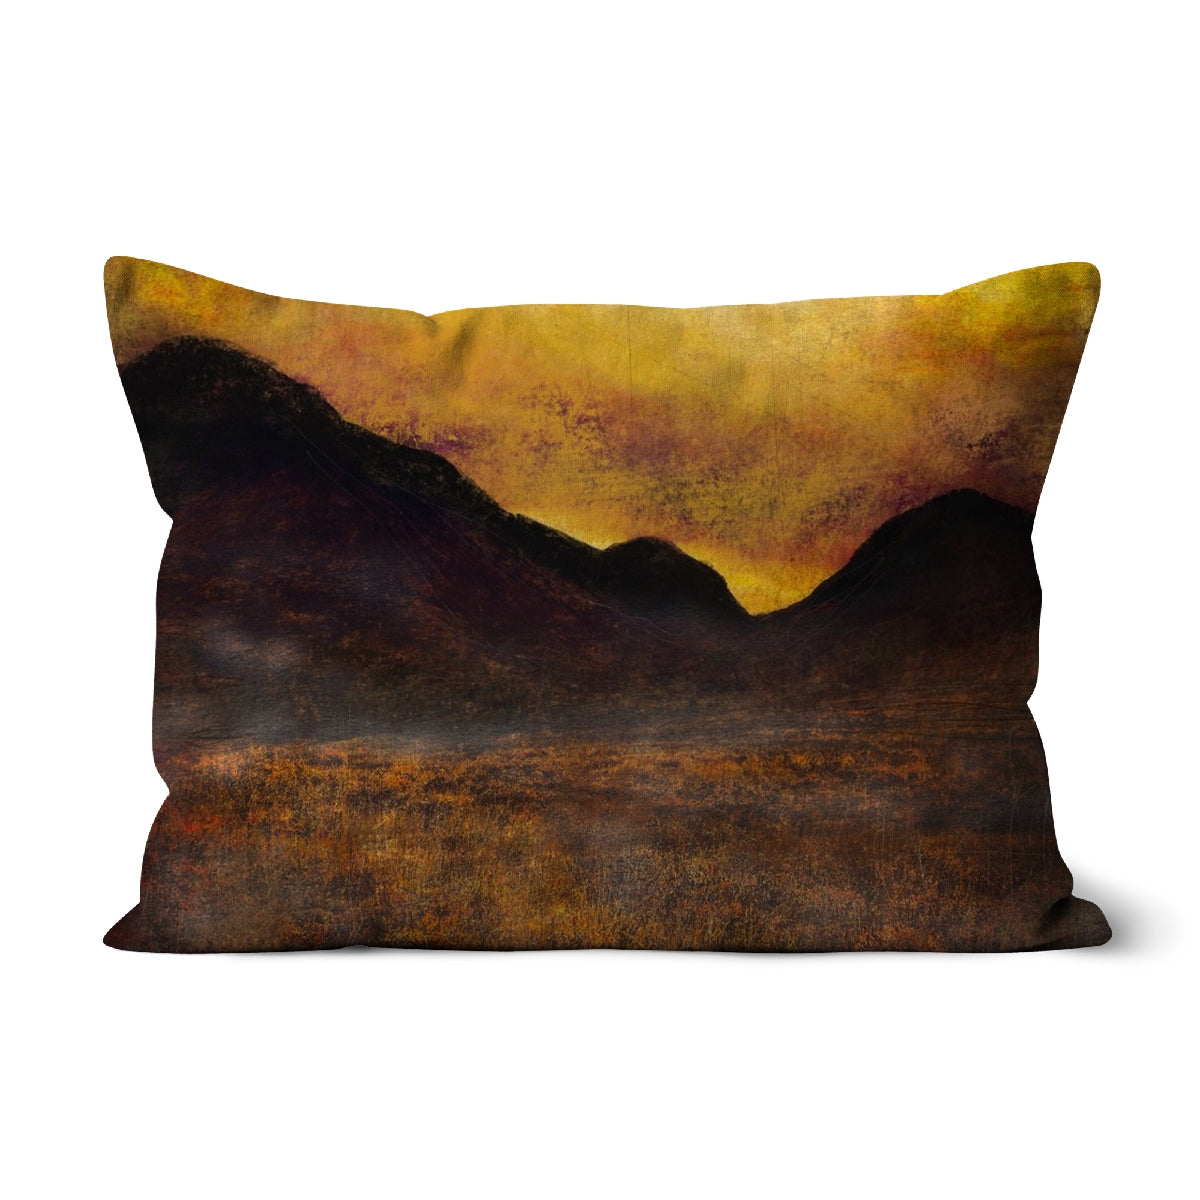 Glencoe Moonlight Art Gifts Cushion-Cushions-Glencoe Art Gallery-Linen-19"x13"-Paintings, Prints, Homeware, Art Gifts From Scotland By Scottish Artist Kevin Hunter